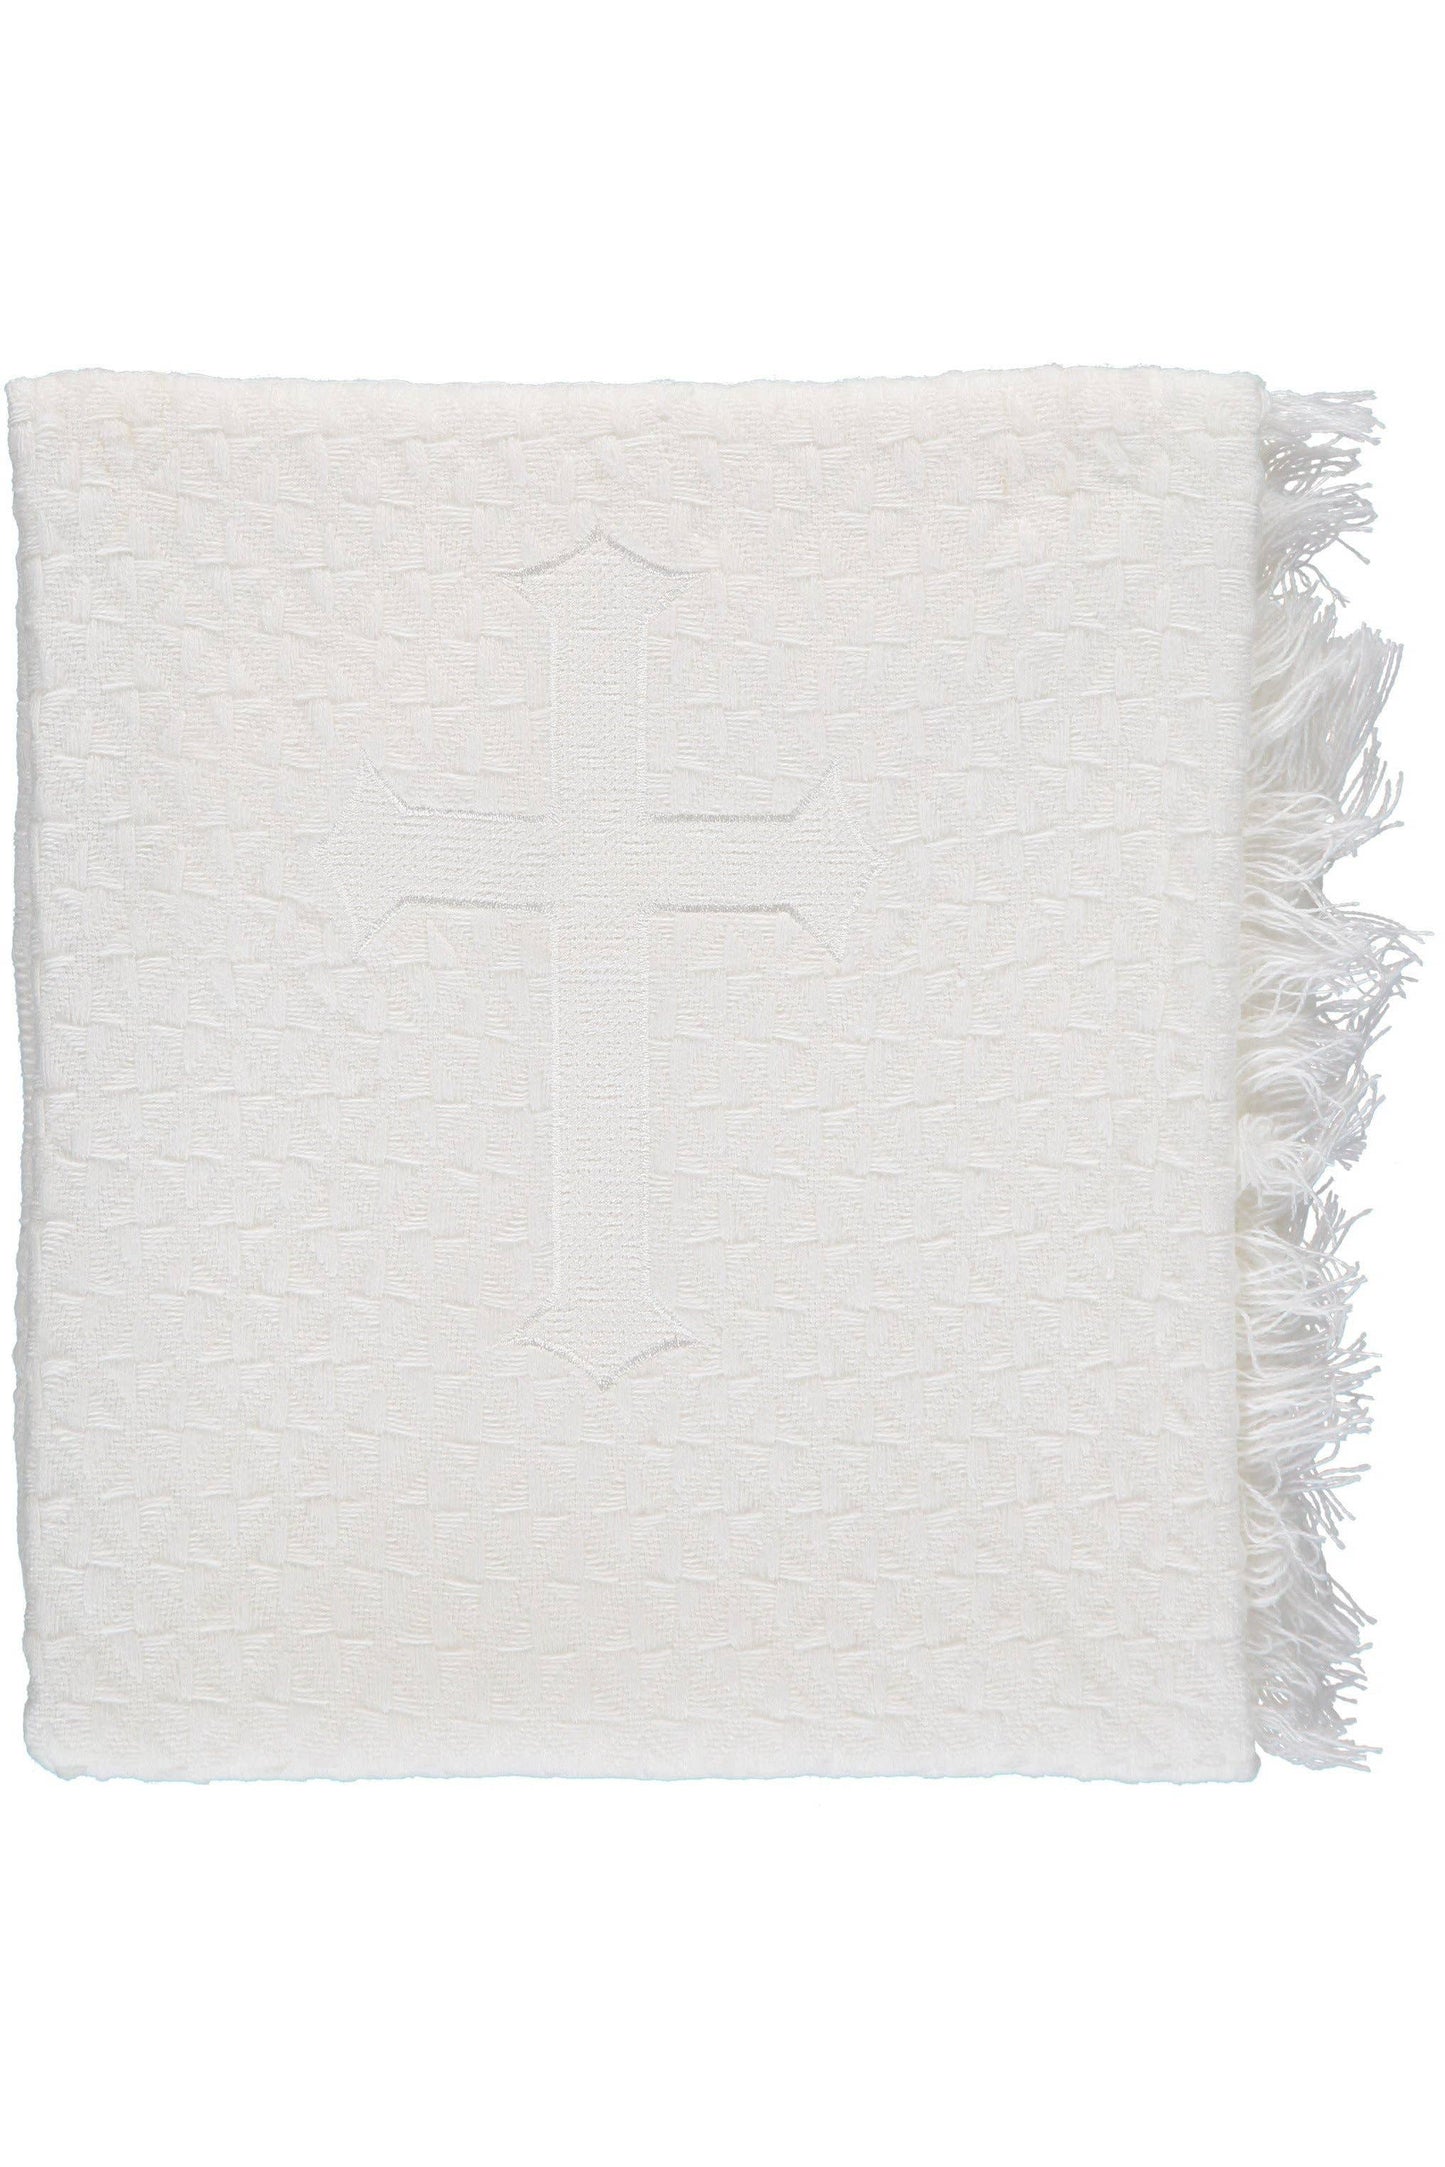 Christening Baptism  Blanket Embroidered Cross in Center